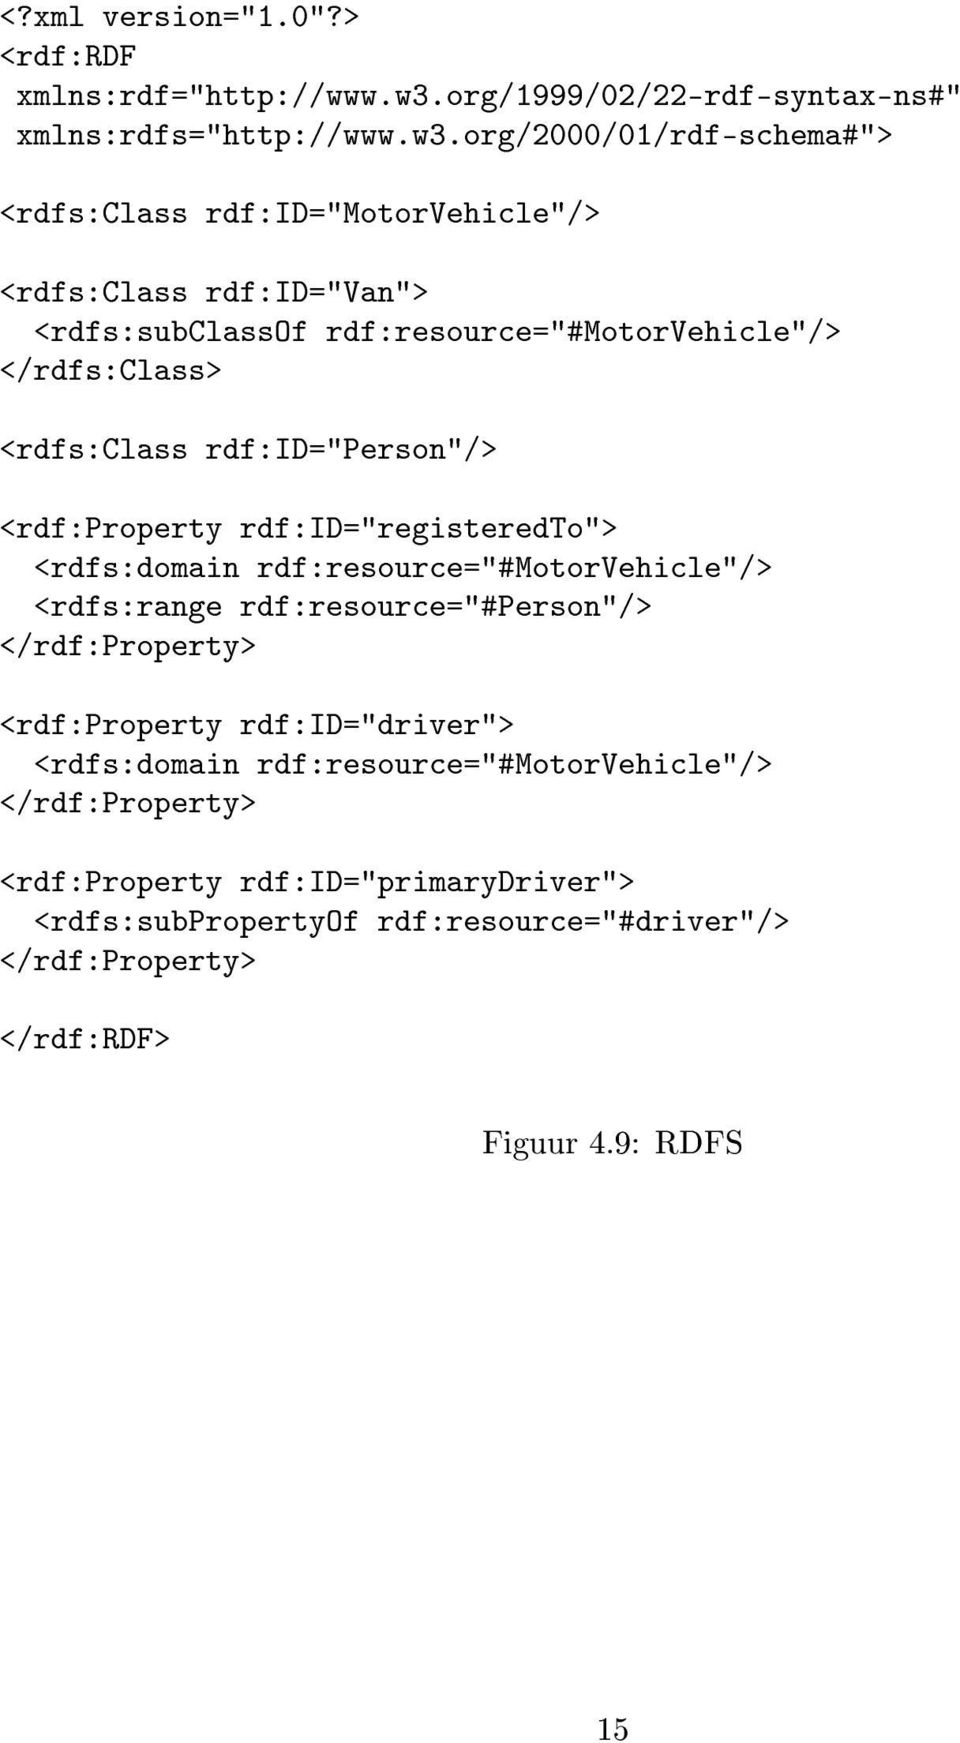 org/2000/01/rdf-schema#"> <rdfs:class rdf:id="motorvehicle"/> <rdfs:class rdf:id="van"> <rdfs:subclassof rdf:resource="#motorvehicle"/> </rdfs:class> <rdfs:class